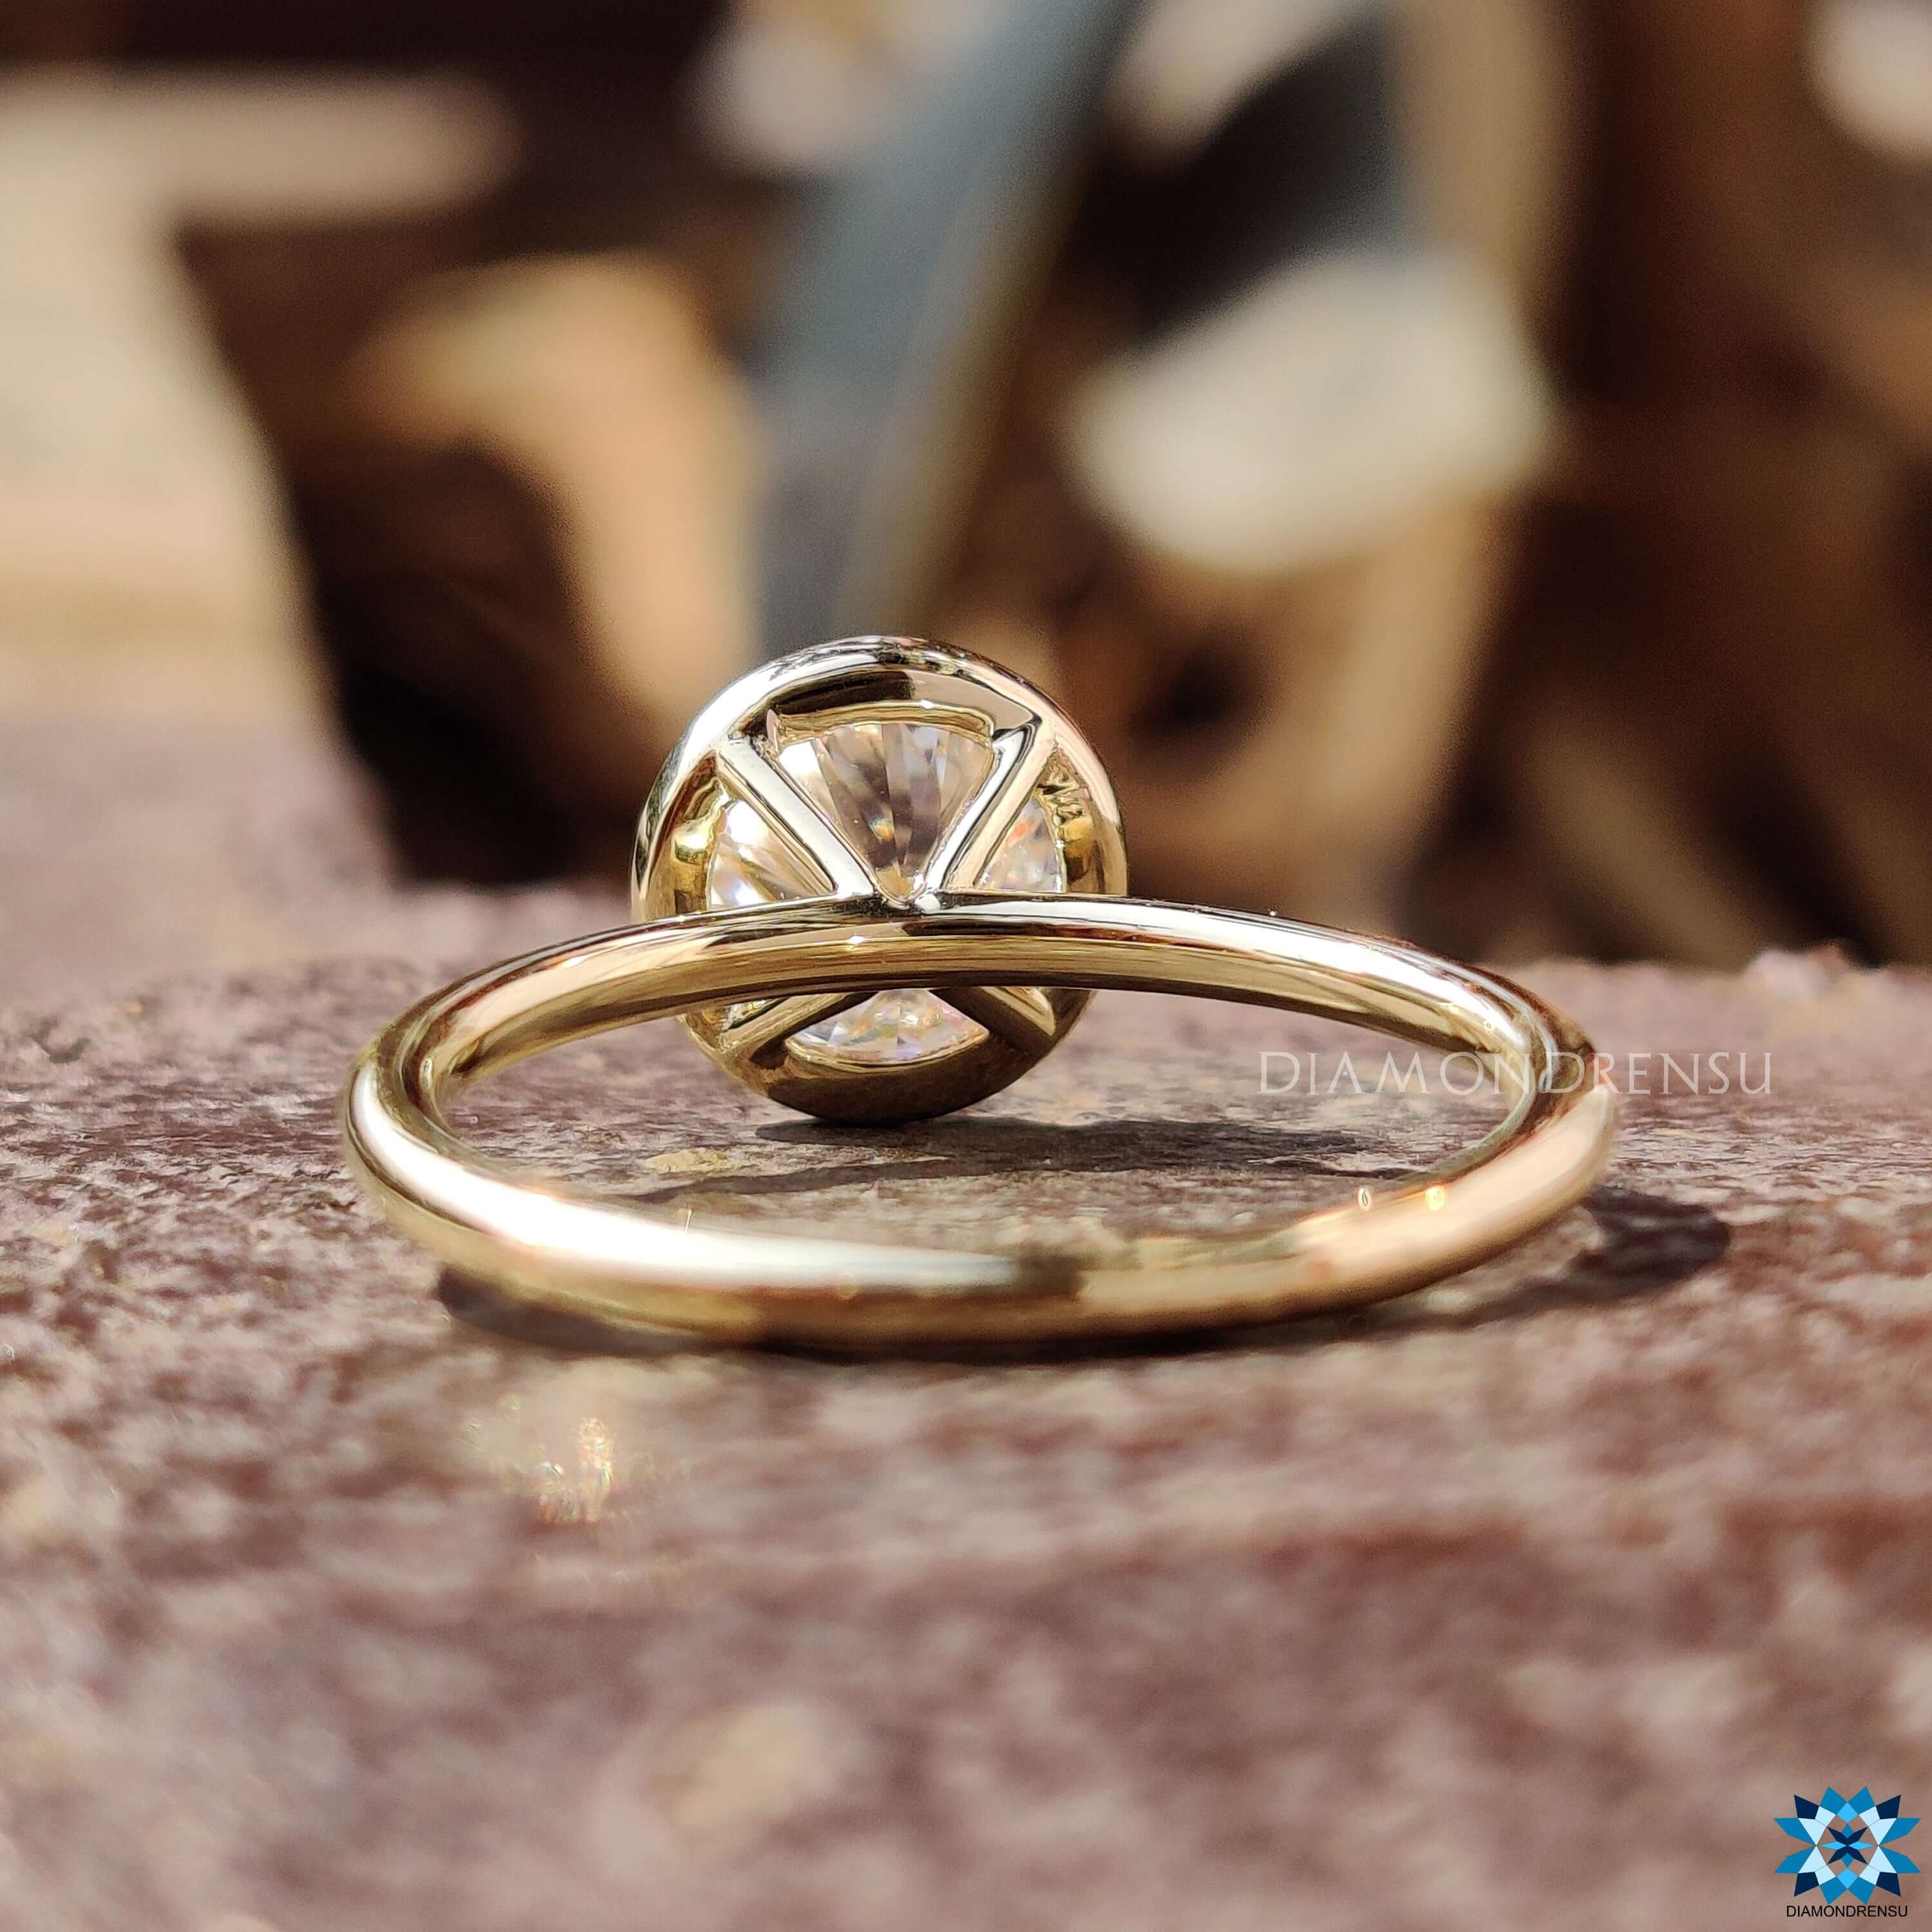 bezel set engagement ring - diamondrensu